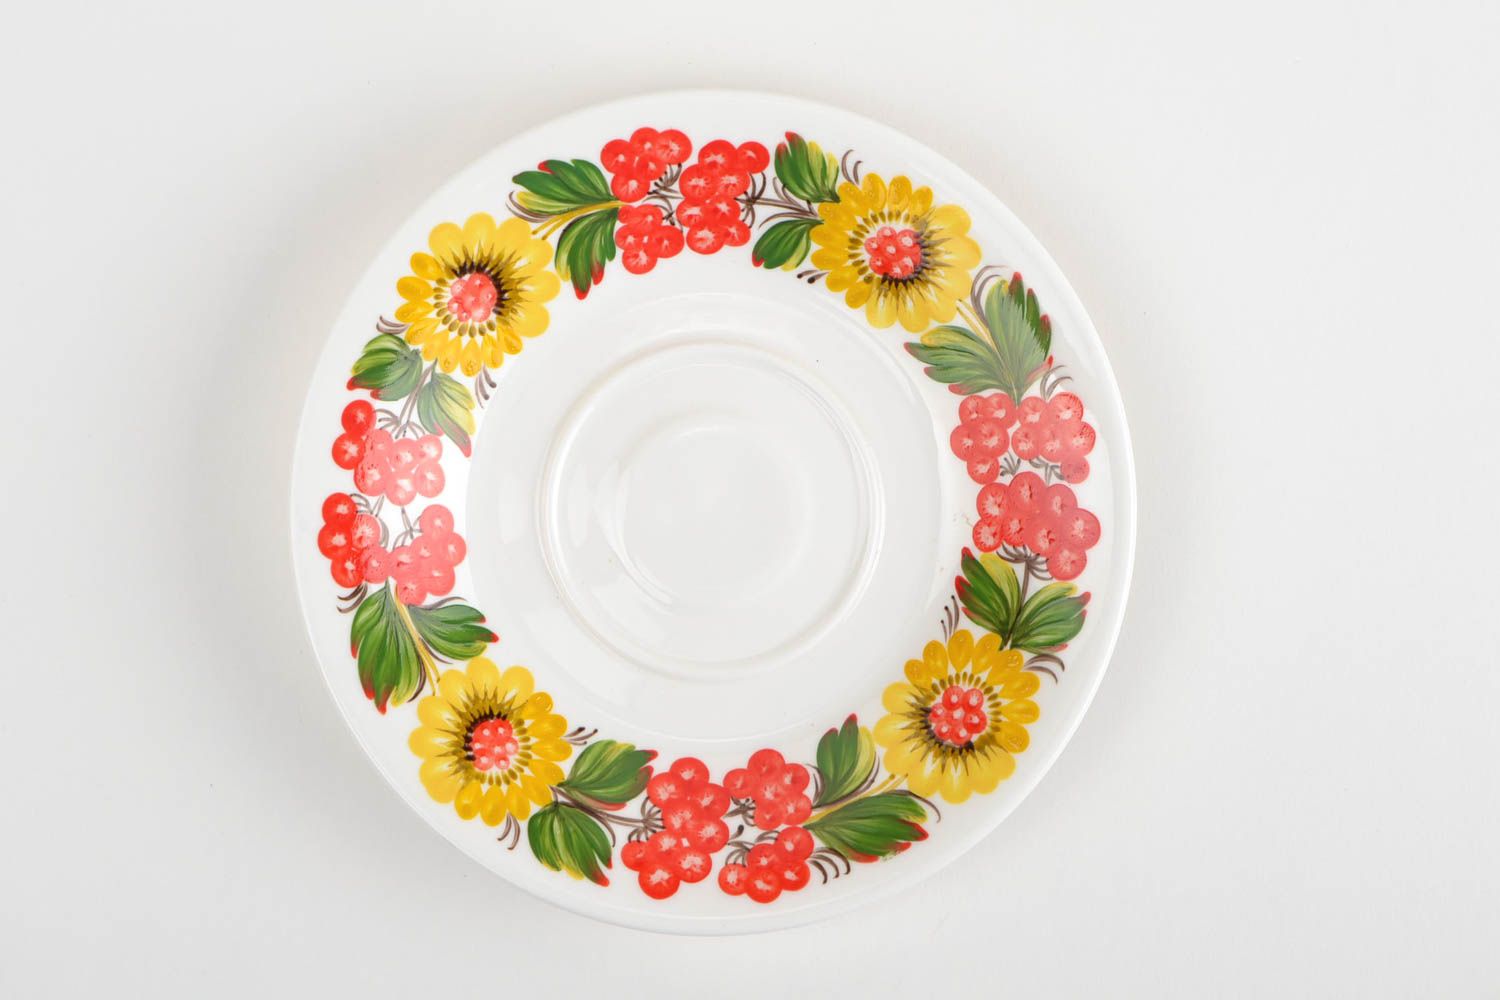 Handmade saucer porcelain saucer painted dishes kitchen accessories decor ideas photo 3